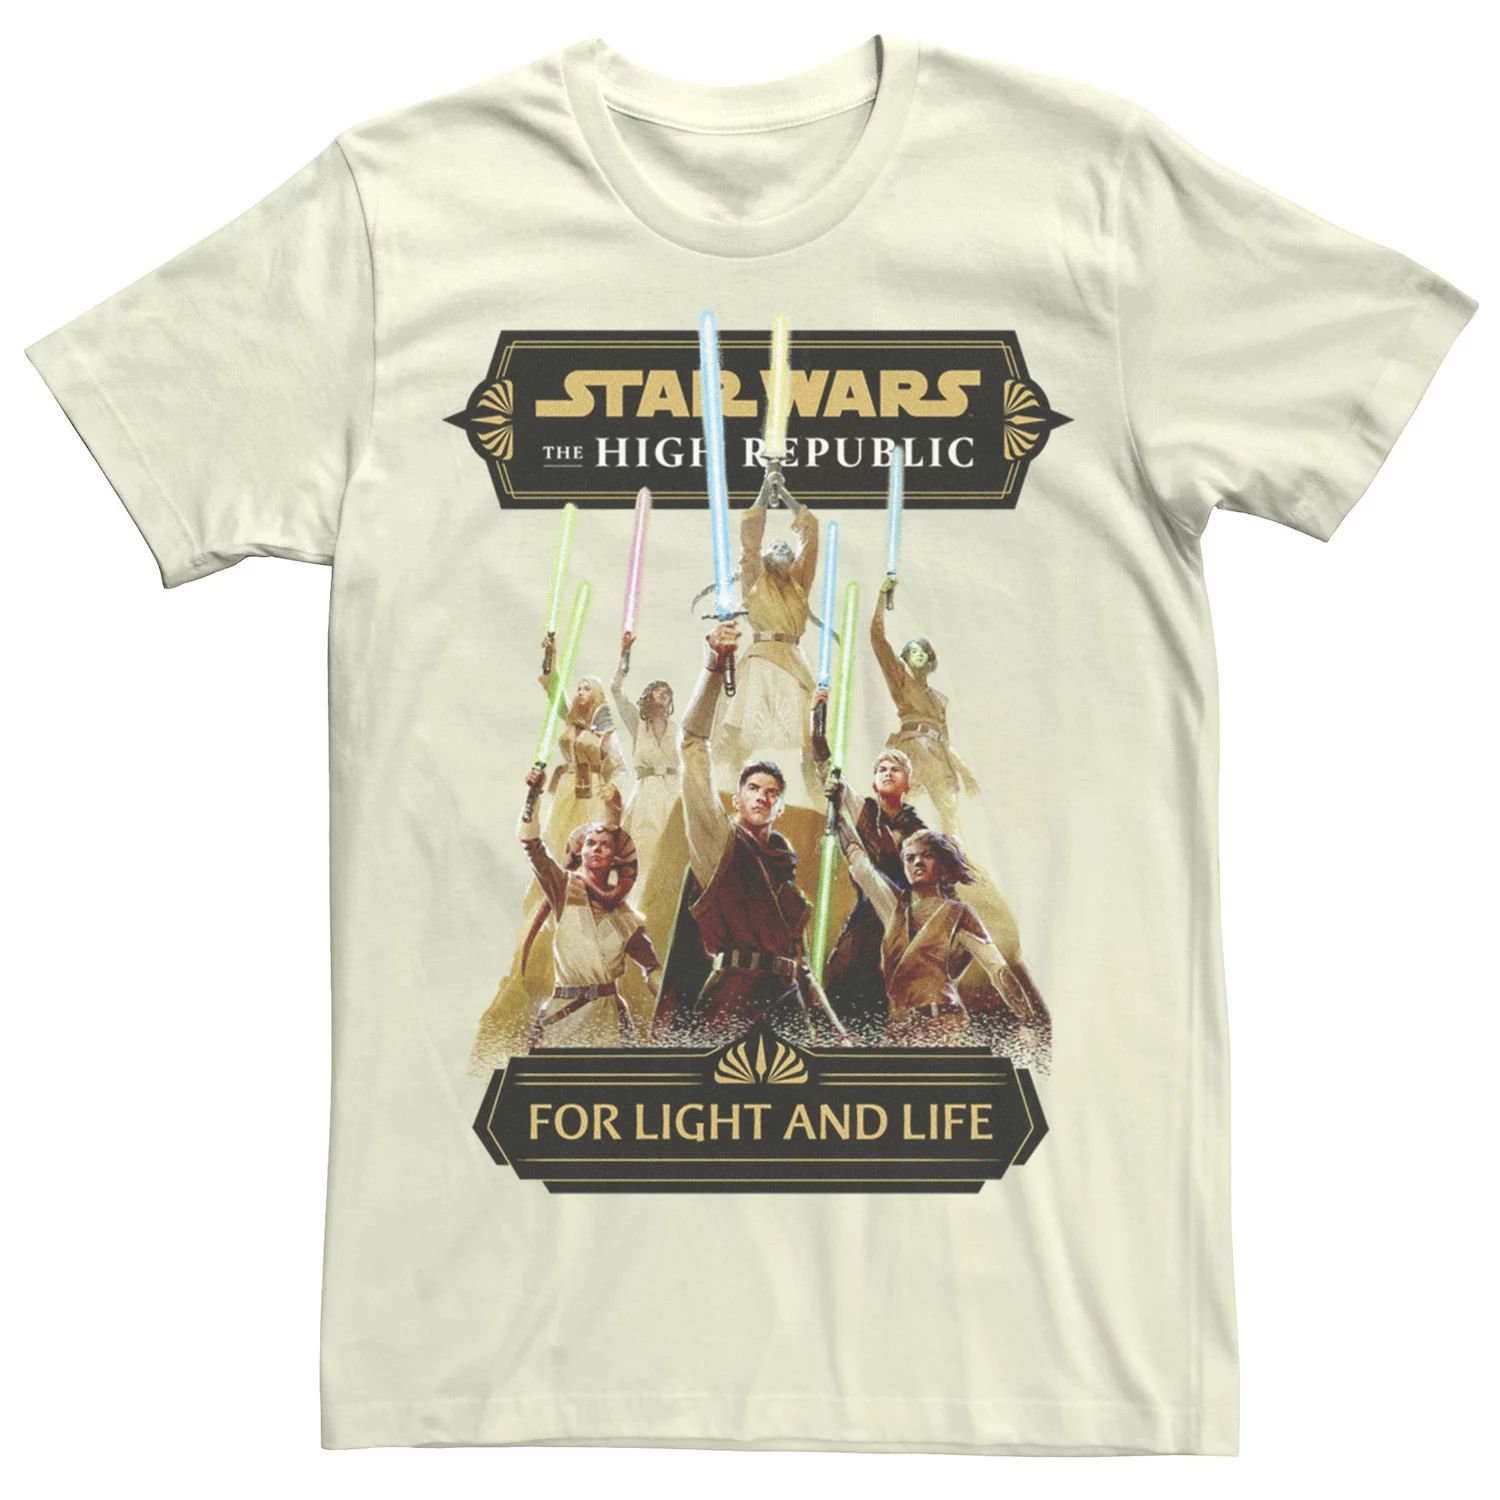 Мужская футболка с высоким плакатом «Звездные войны» Licensed Character